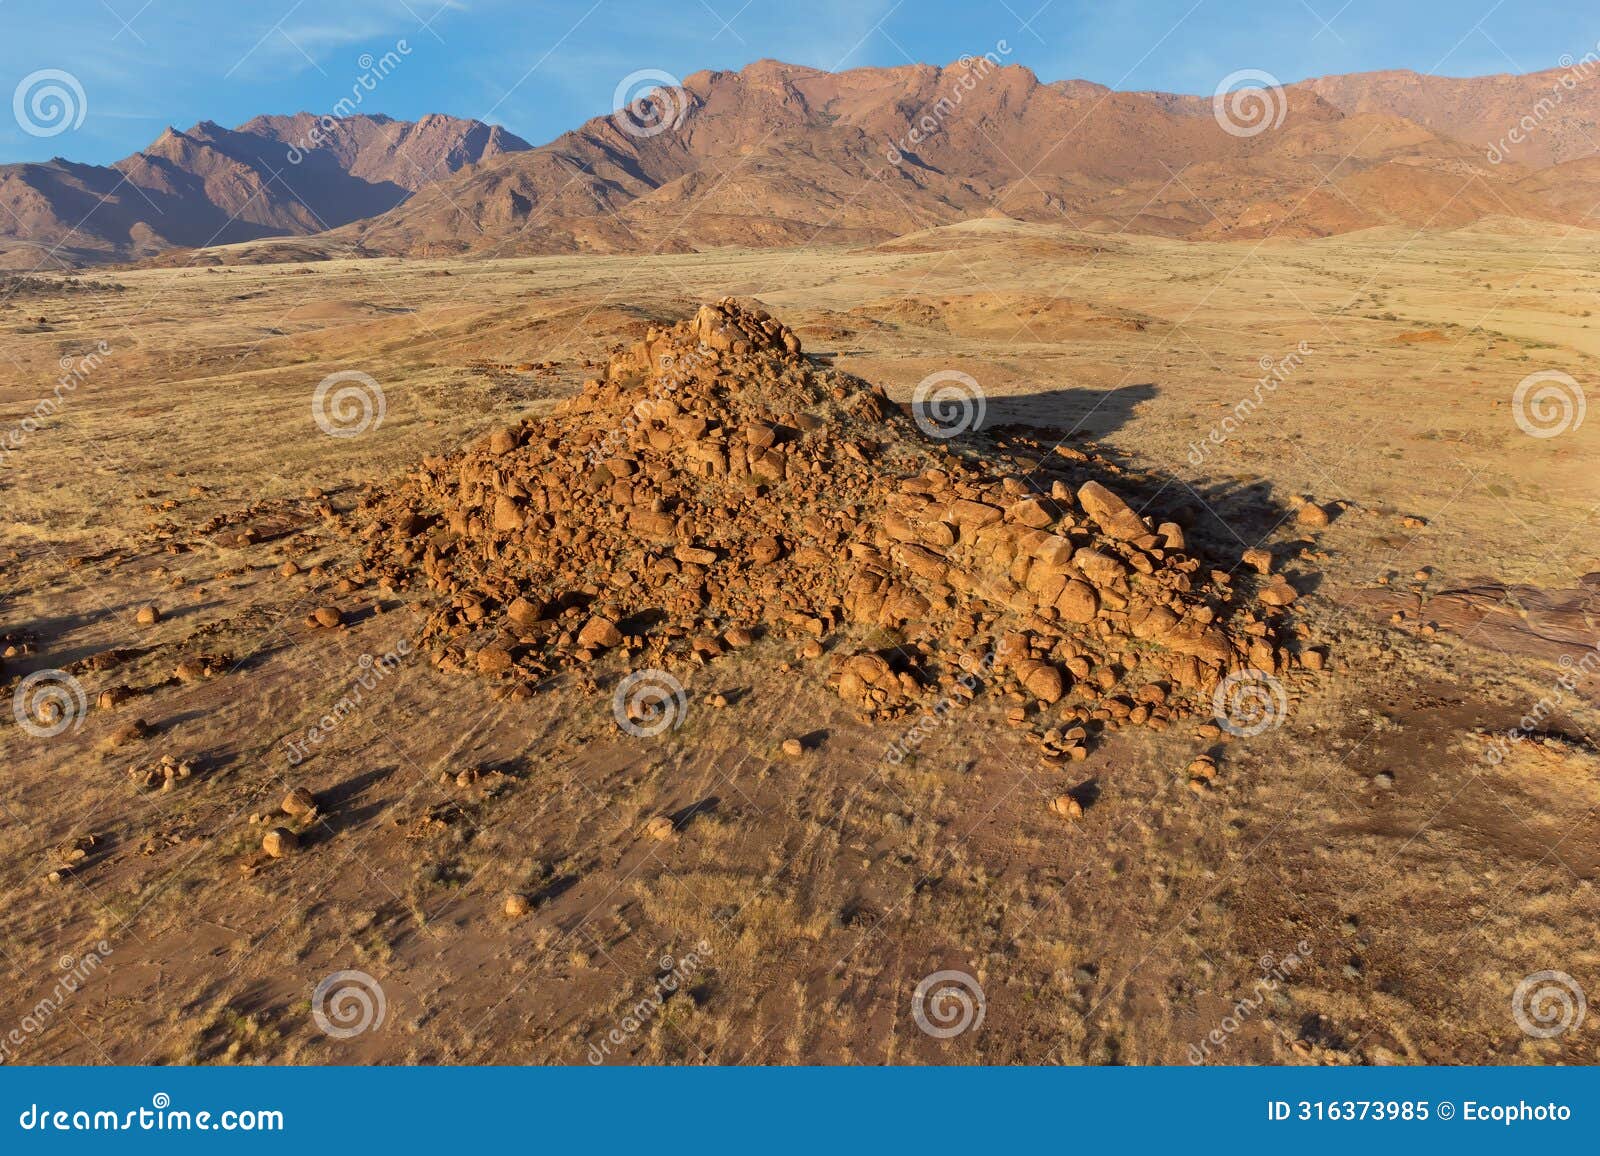 desert landscape with rocks and arid grassland, brandberg mountain, namibia